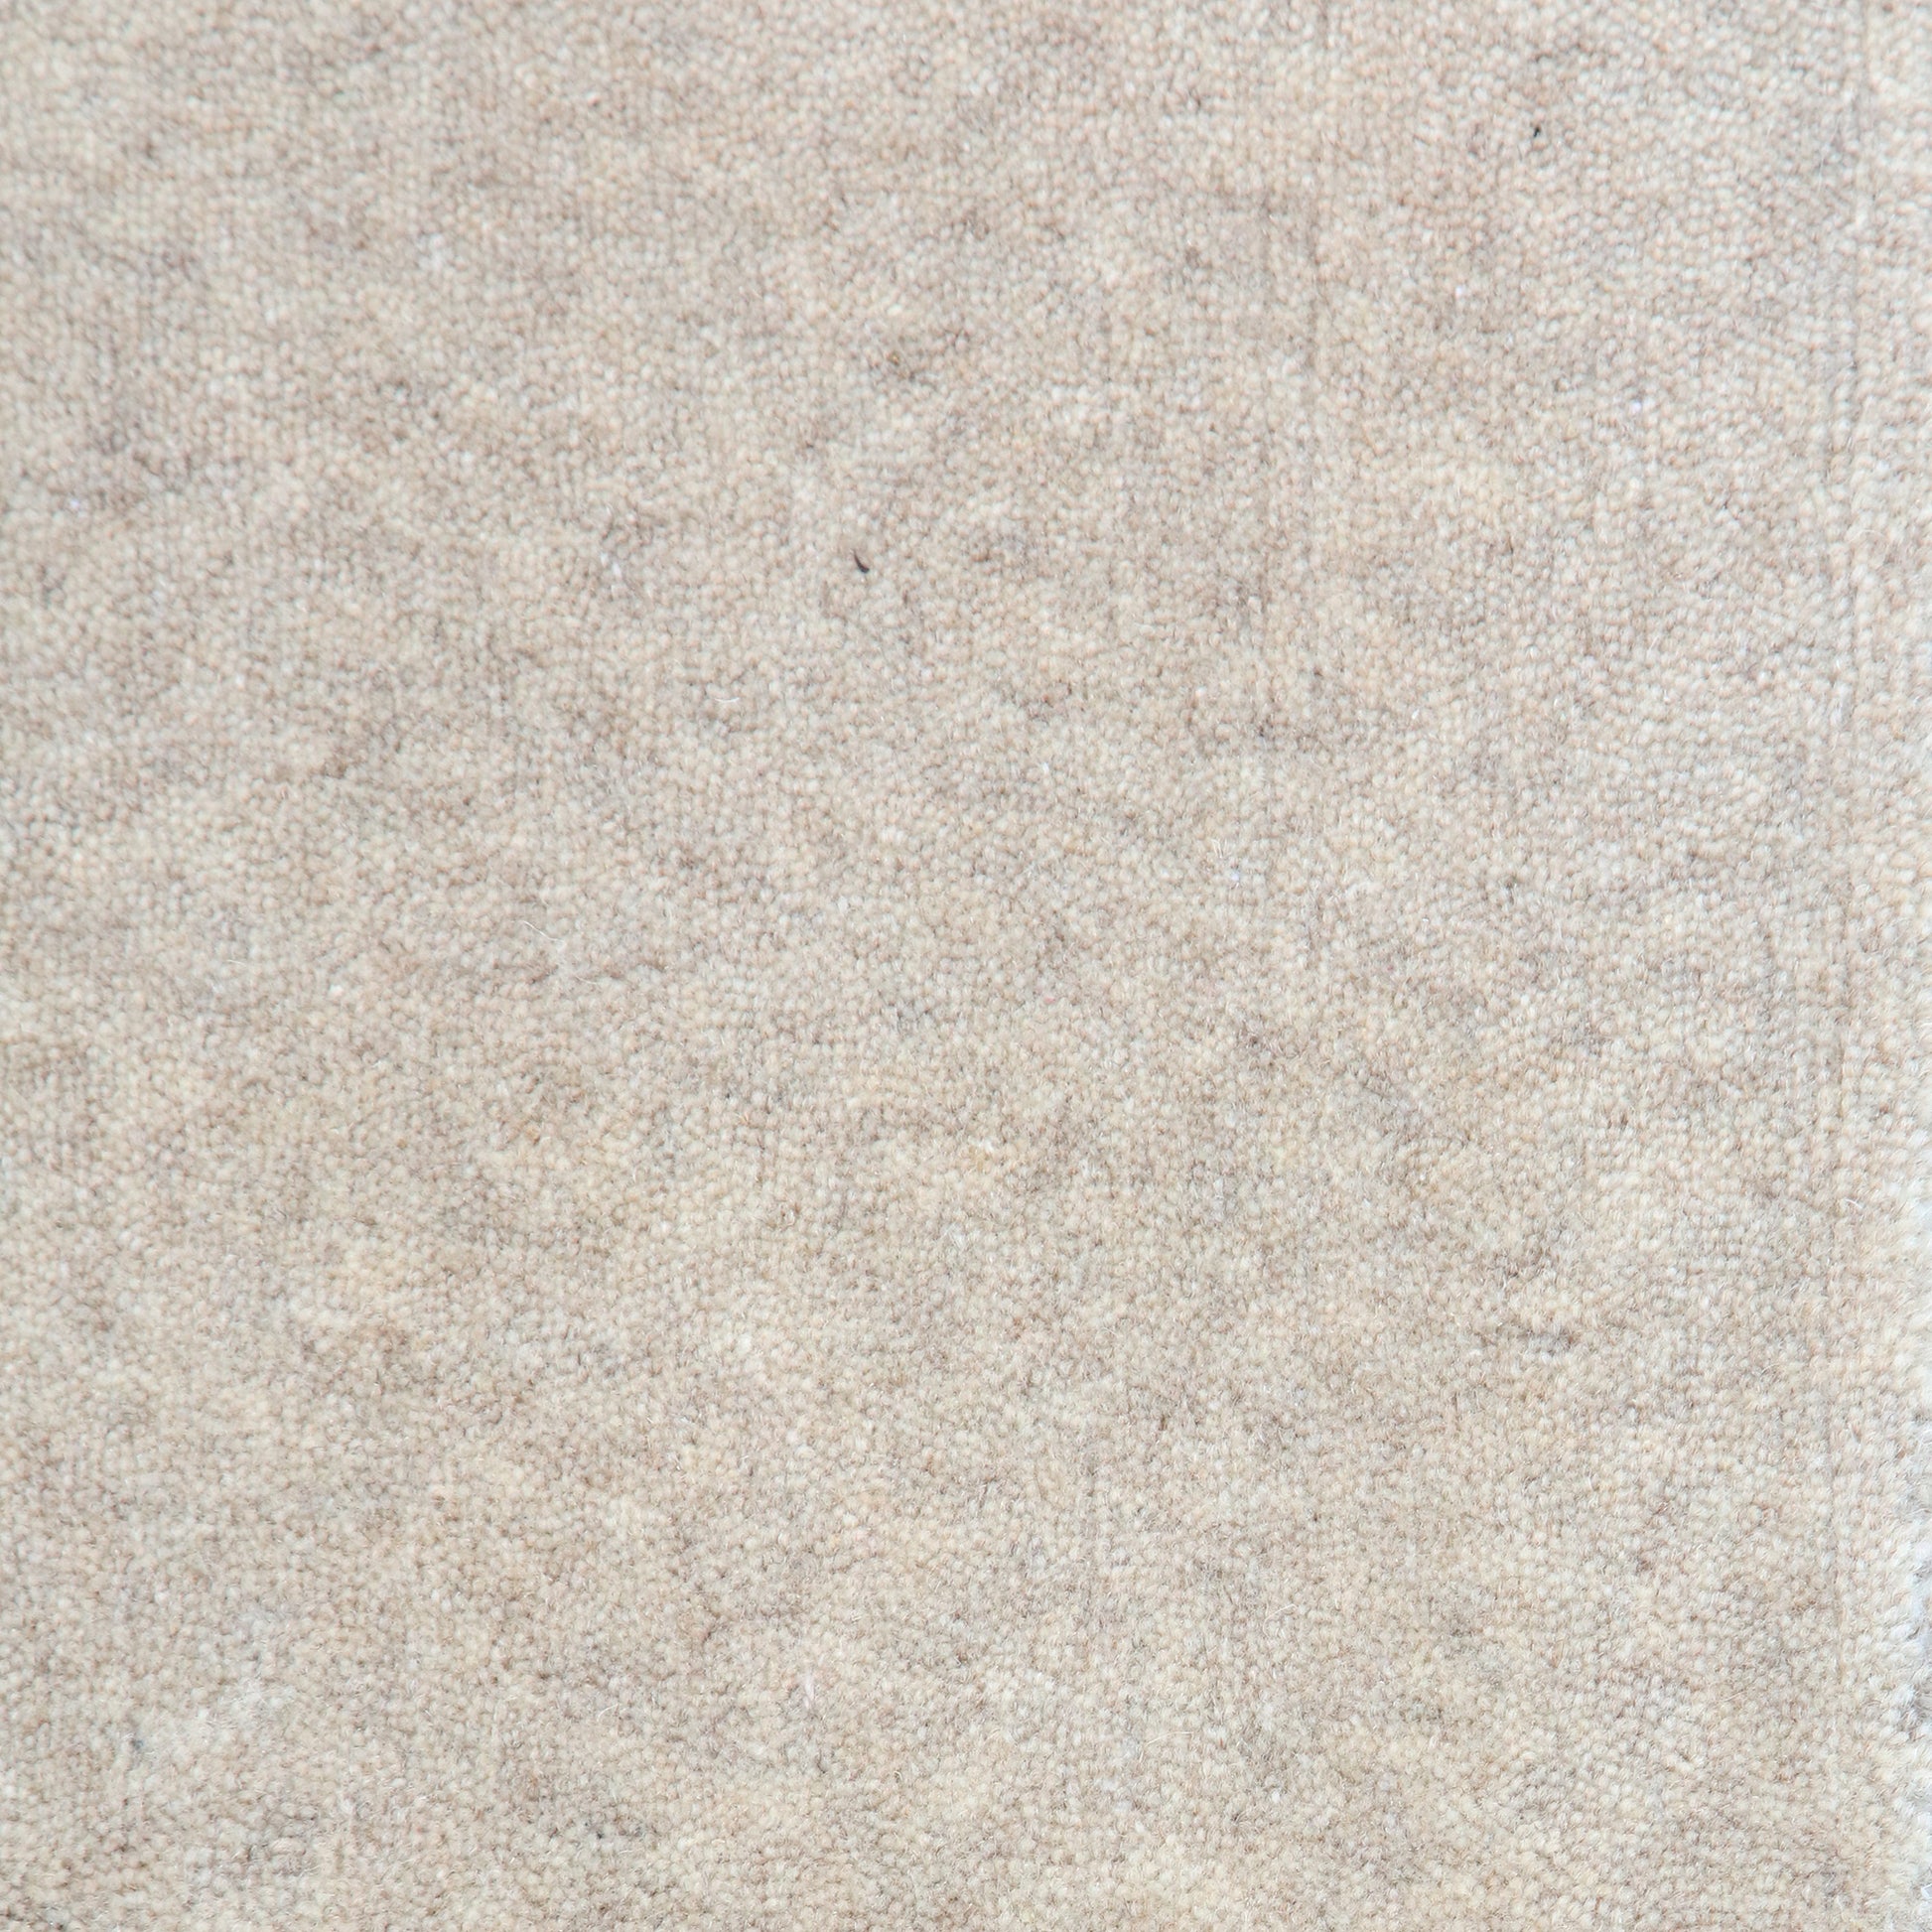 Cut Pile Oatmeal Wool Carpet